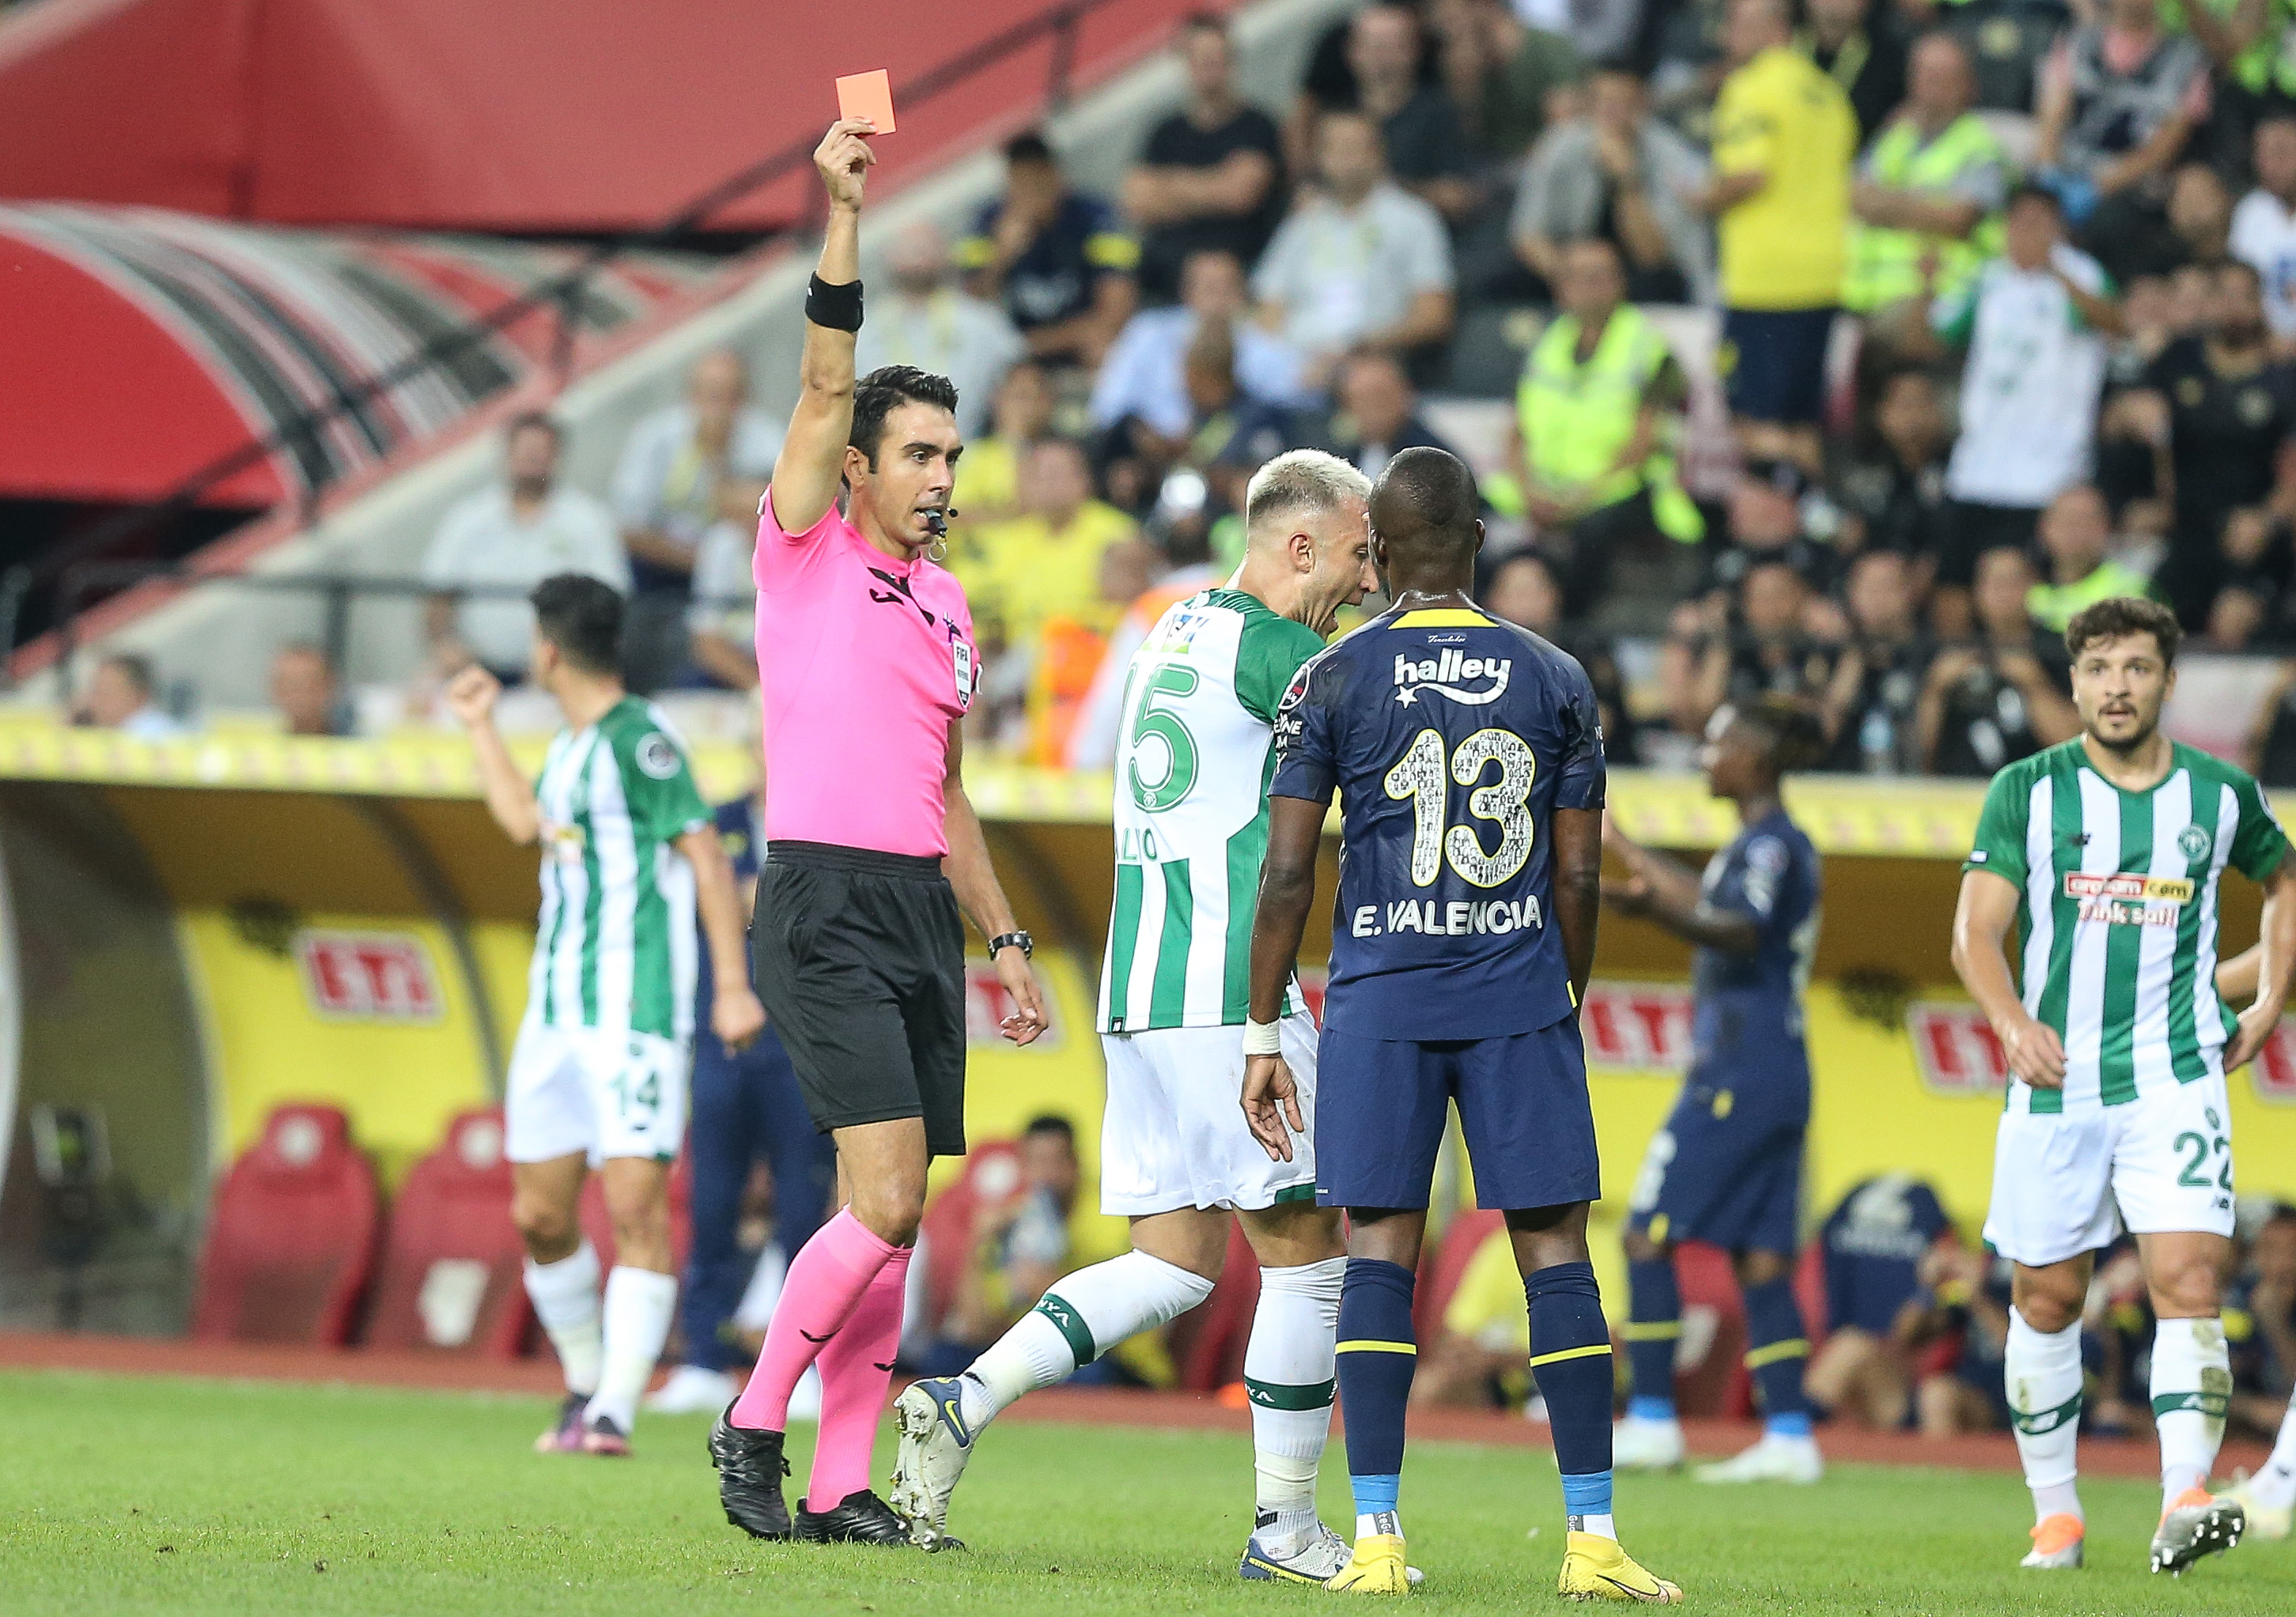 Antalyaspor vs Fenerbahçe: A Clash of Titans in Turkish Football